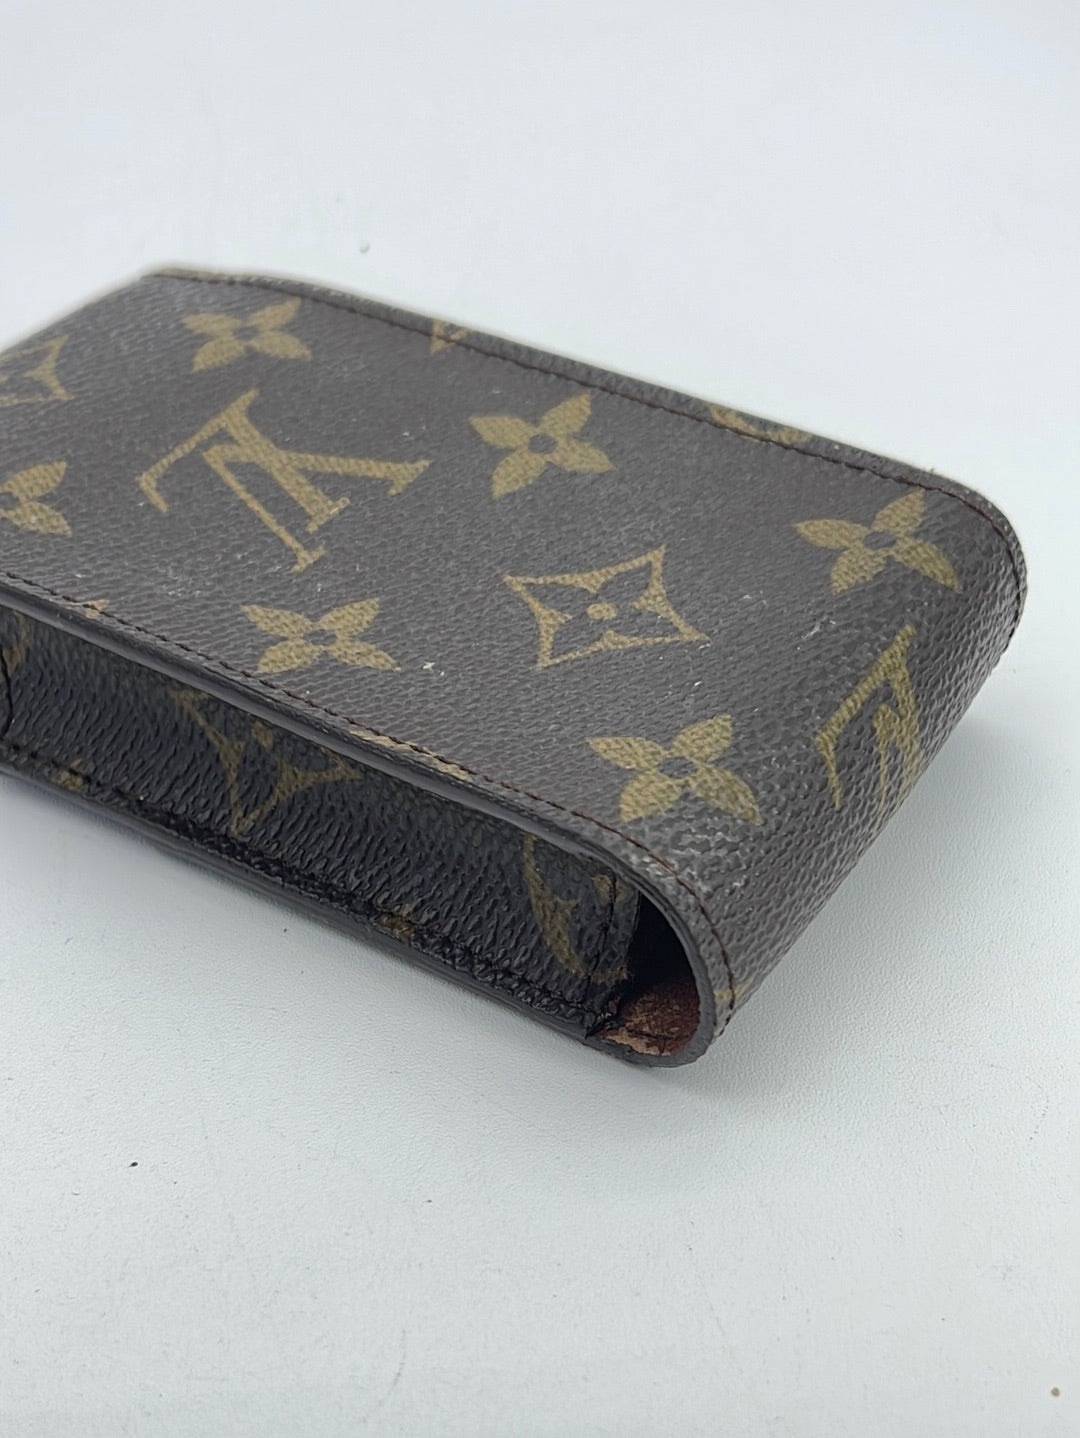 Vintage Louis Vuitton Damier Ebene (Tobacco) Small Case CT1013